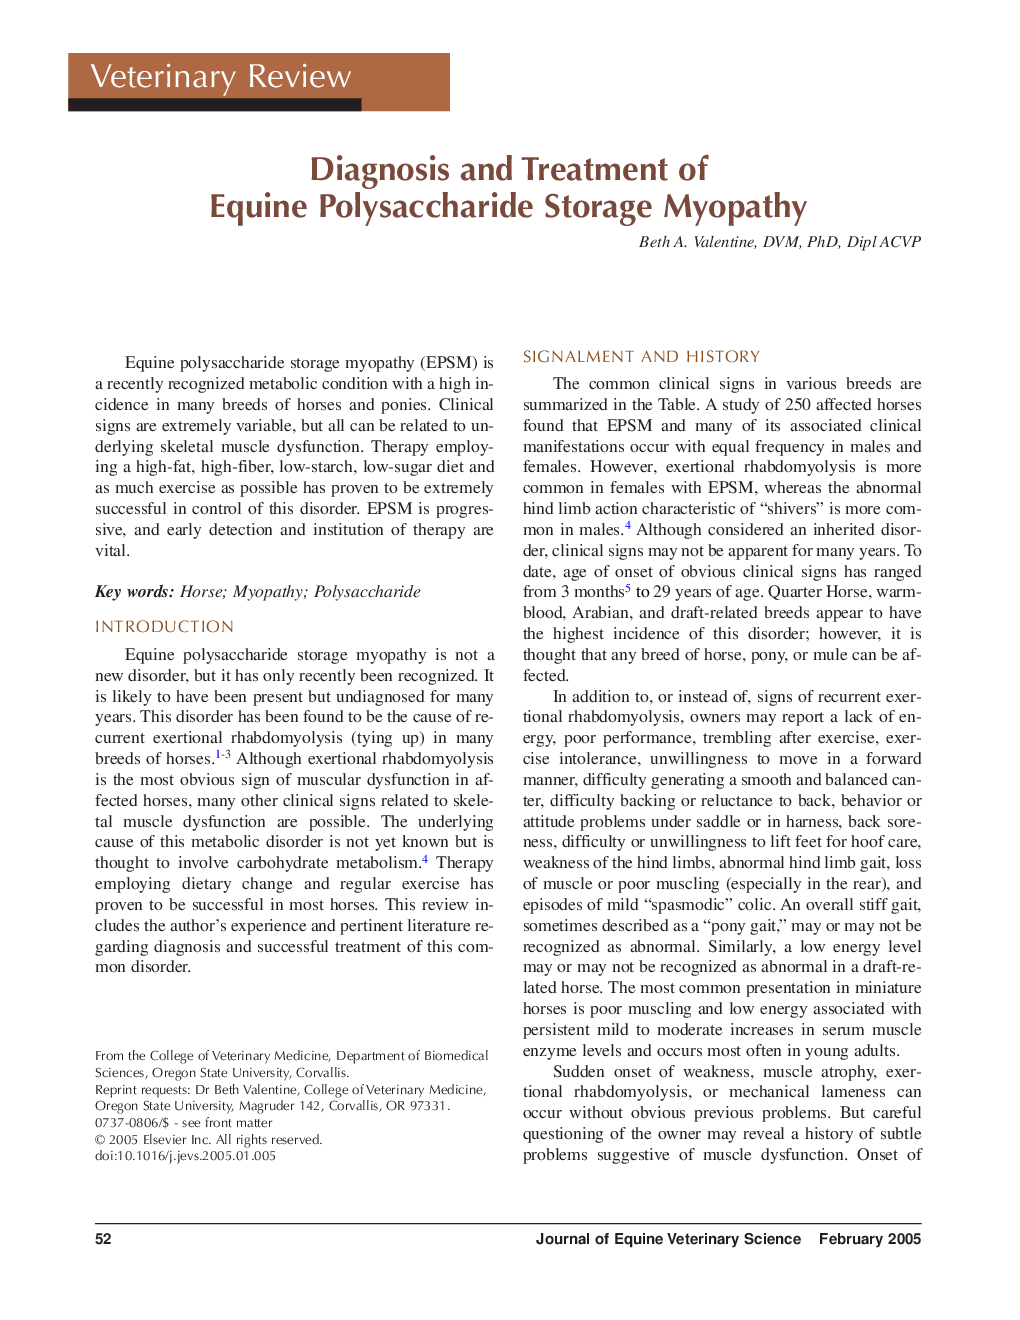 Diagnosis and treatment of equine polysaccharide storage myopathy